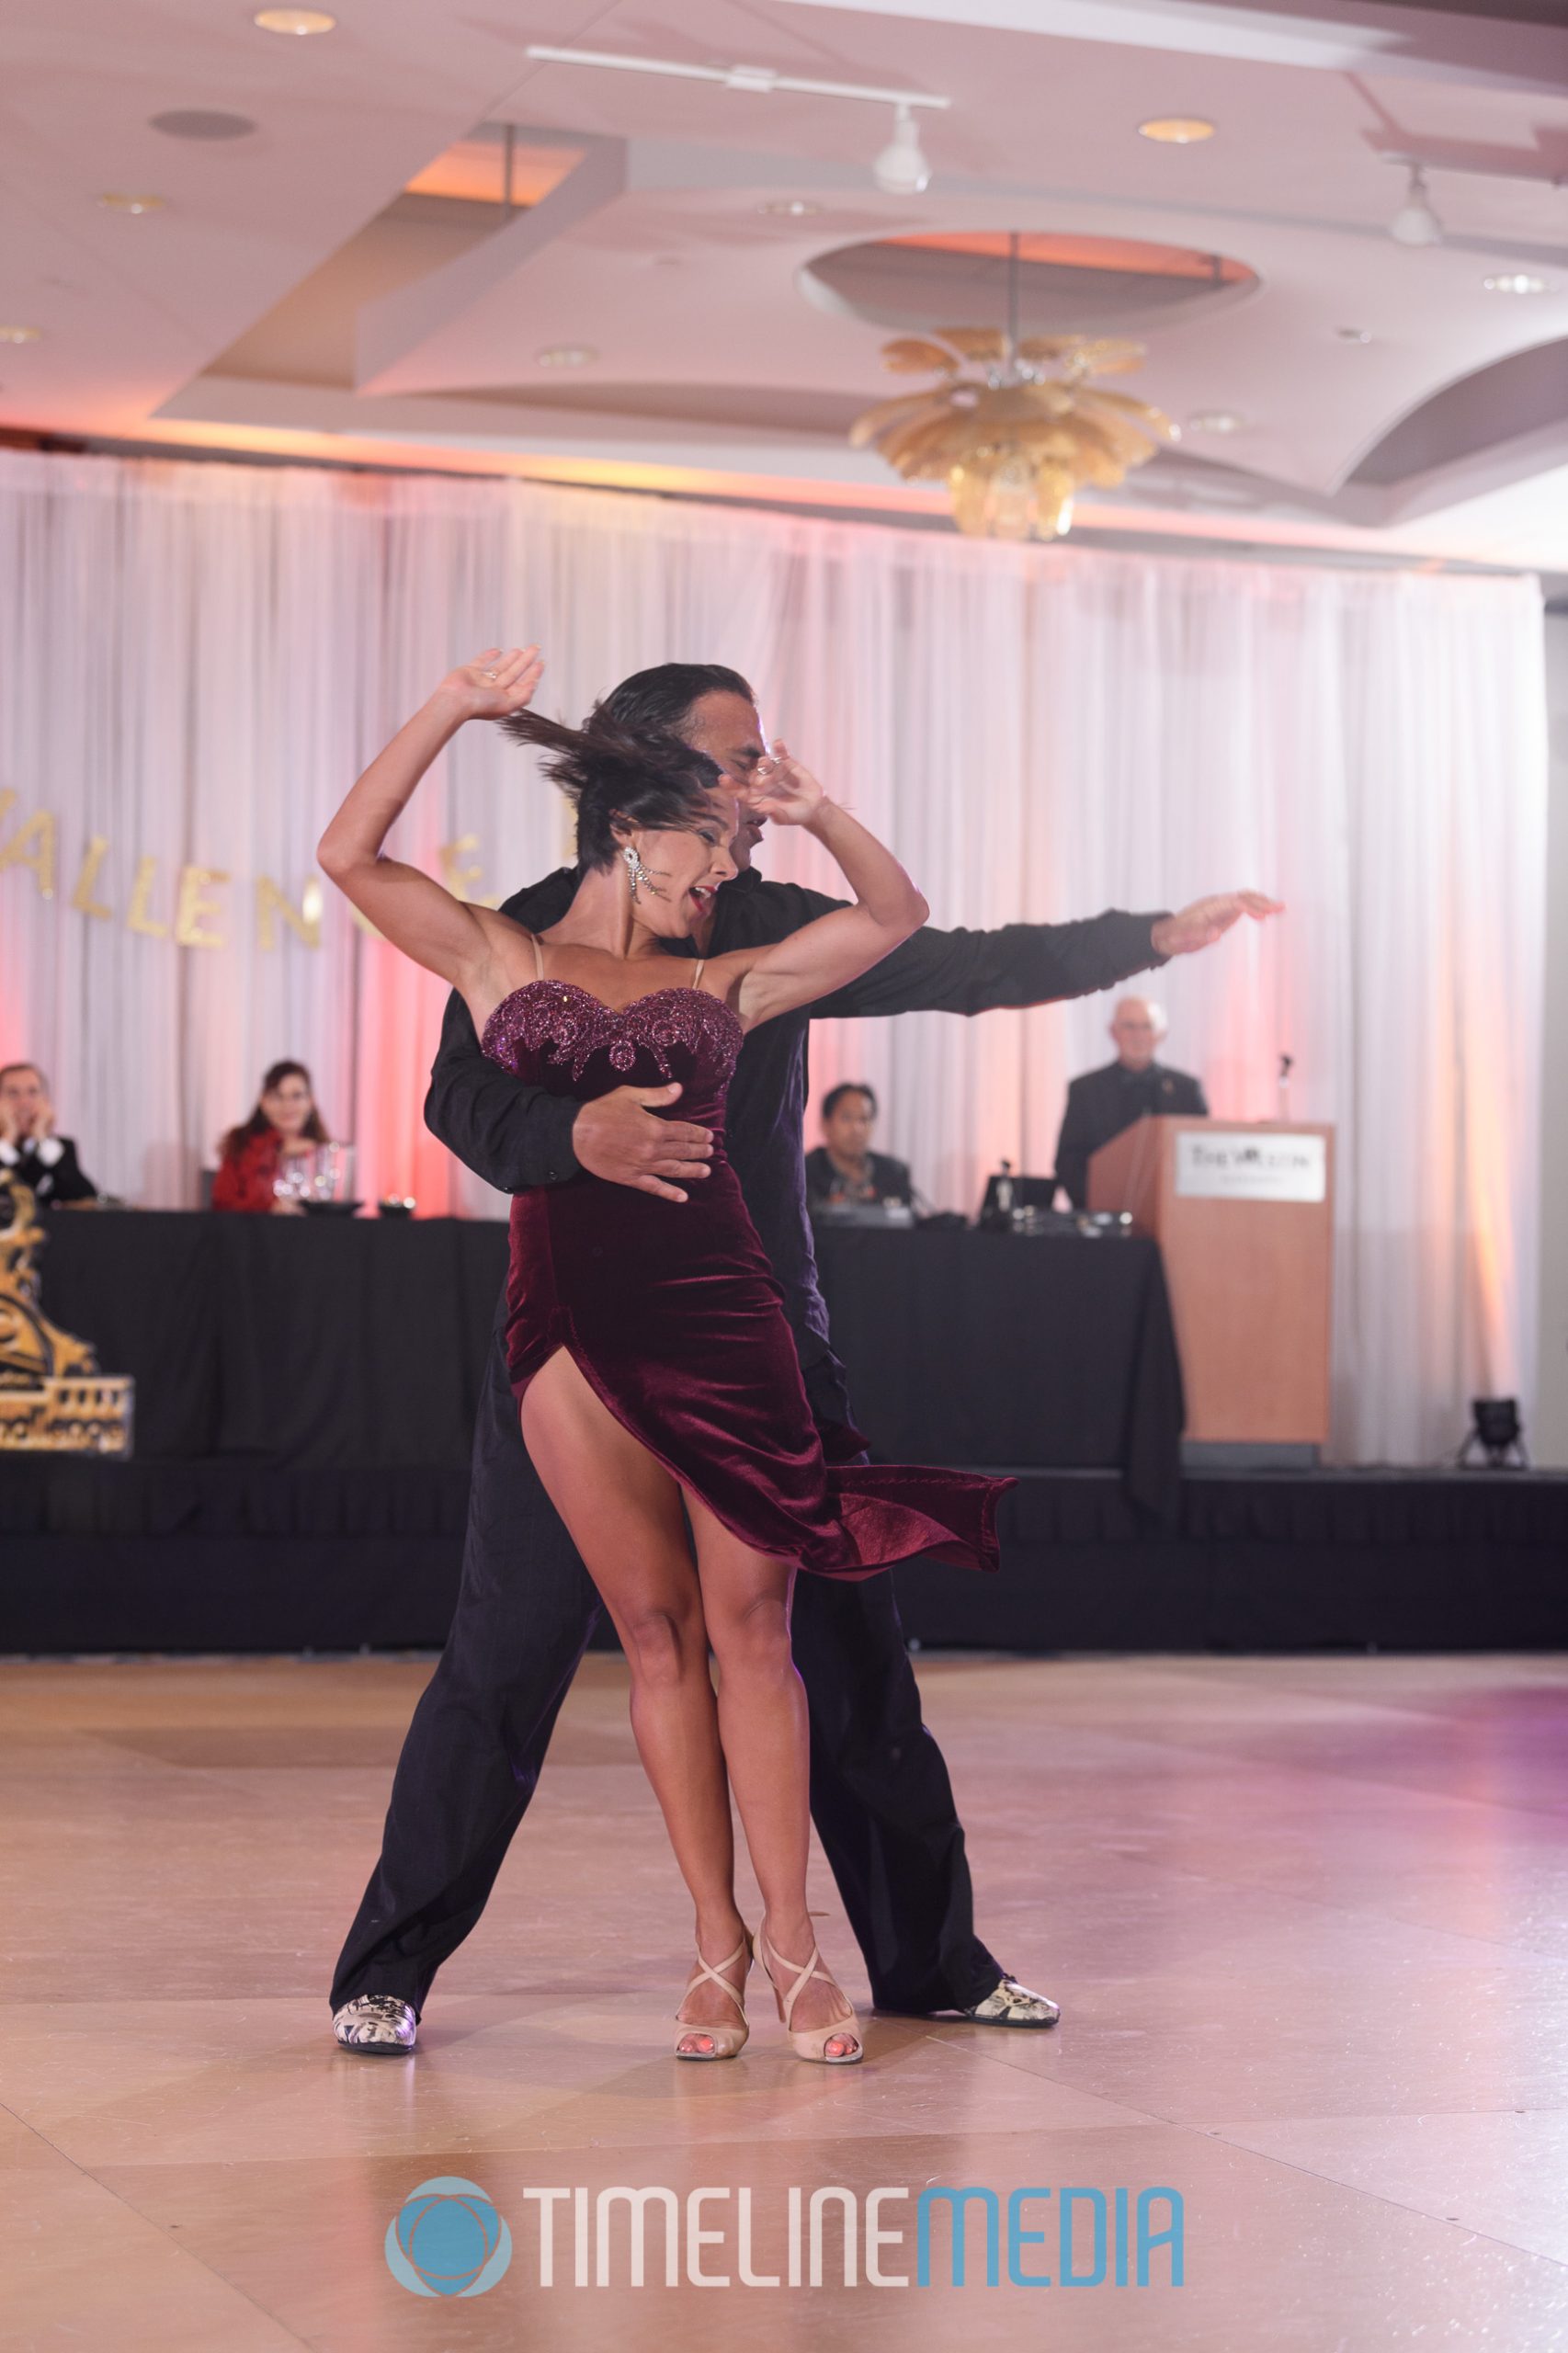 Guadalupe Garcia and Junior Cervila dancing a professional show ©TimeLine Media